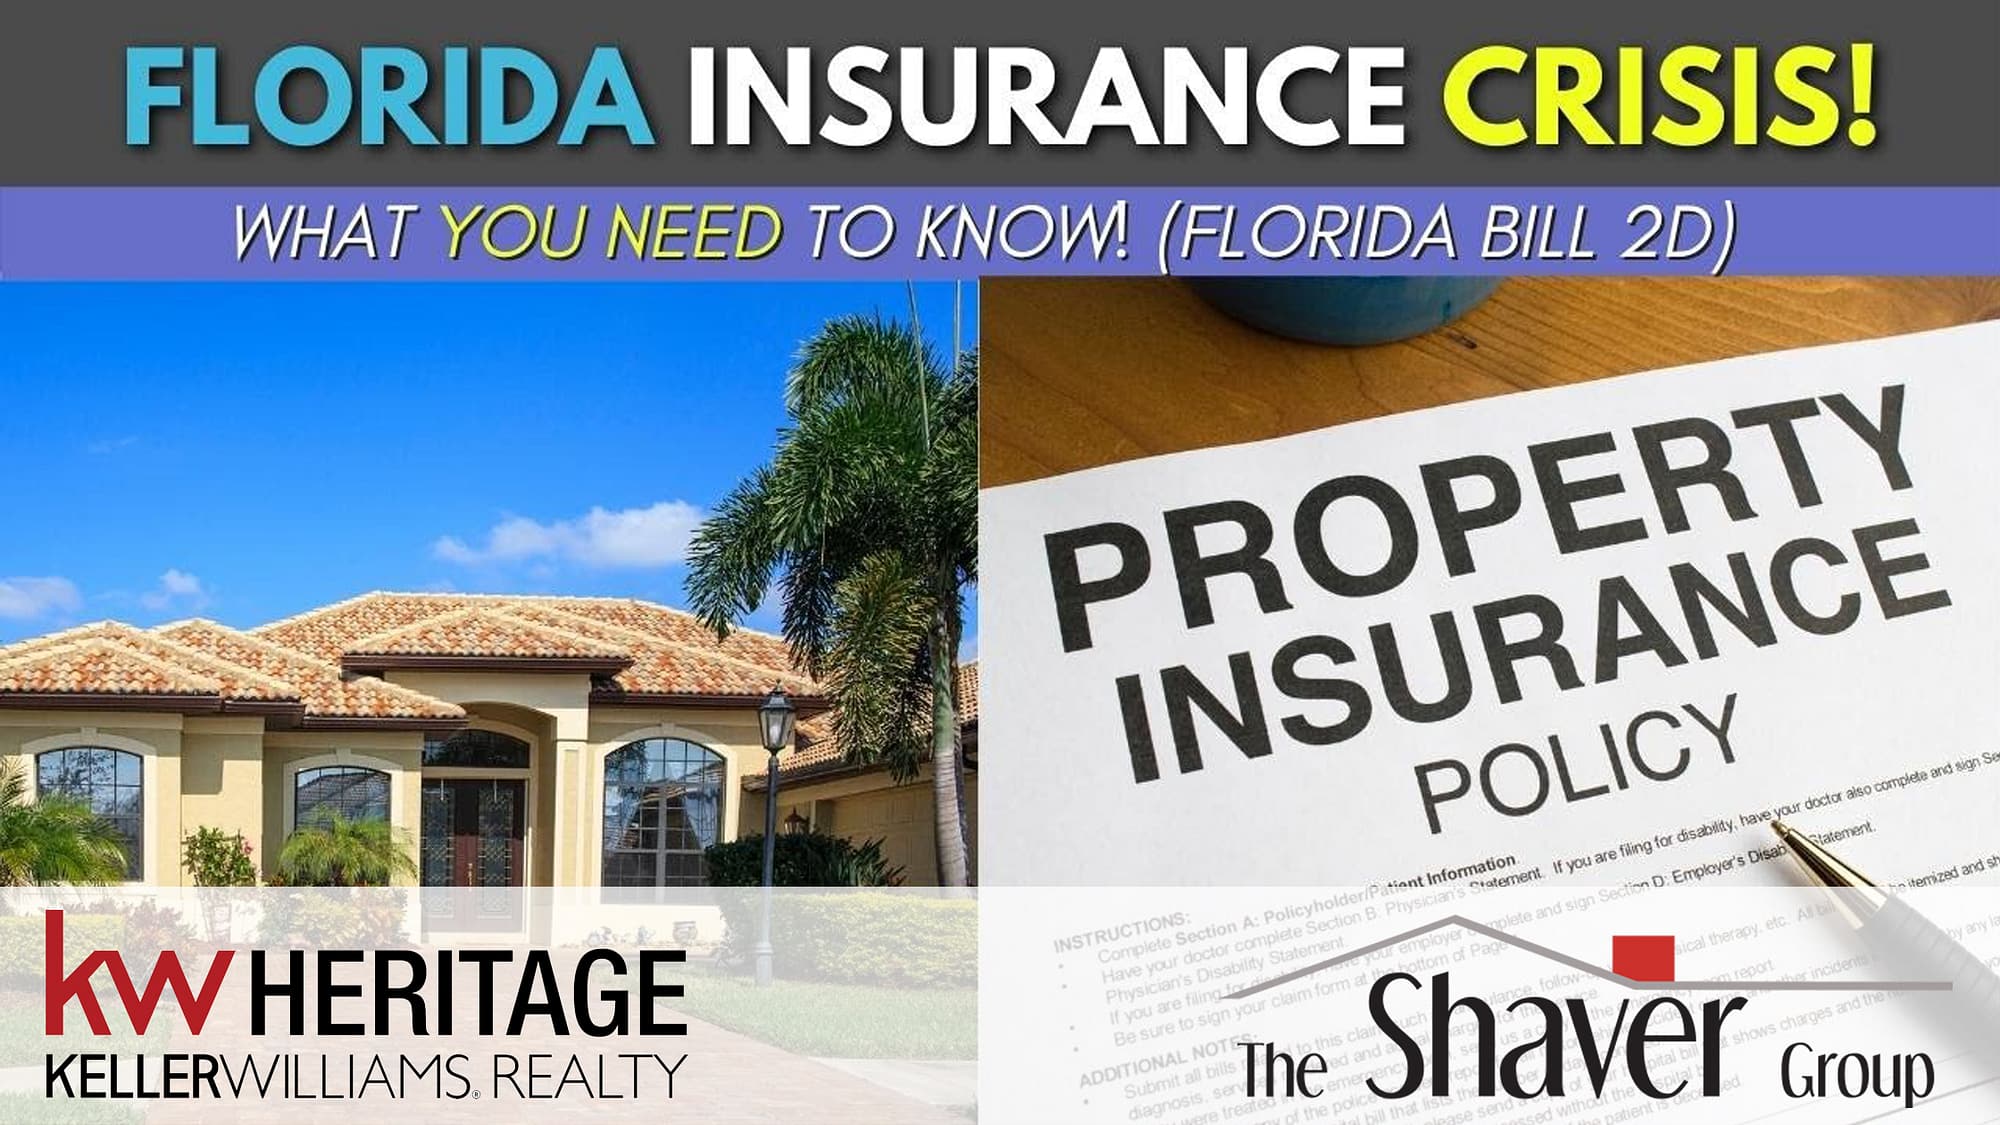 Florida Homeowner’s Insurance CRISIS! Shaver